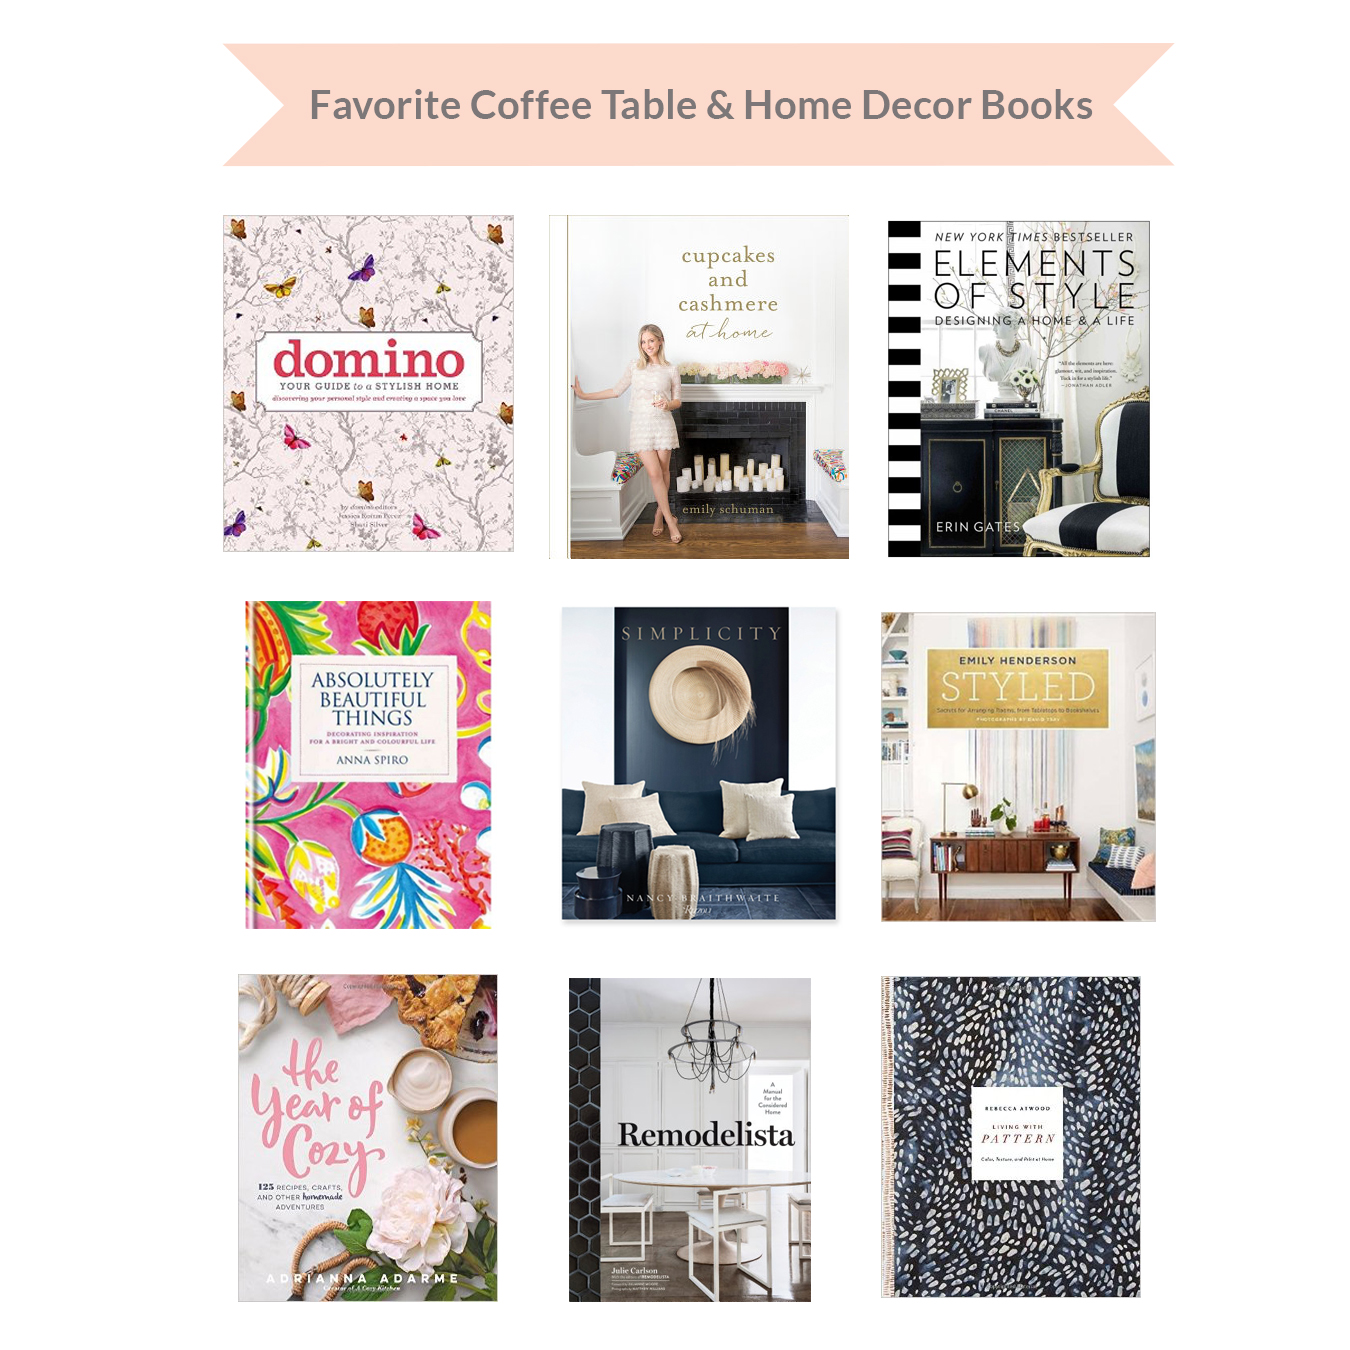 Favorite Home Decor & Coffee Table Books